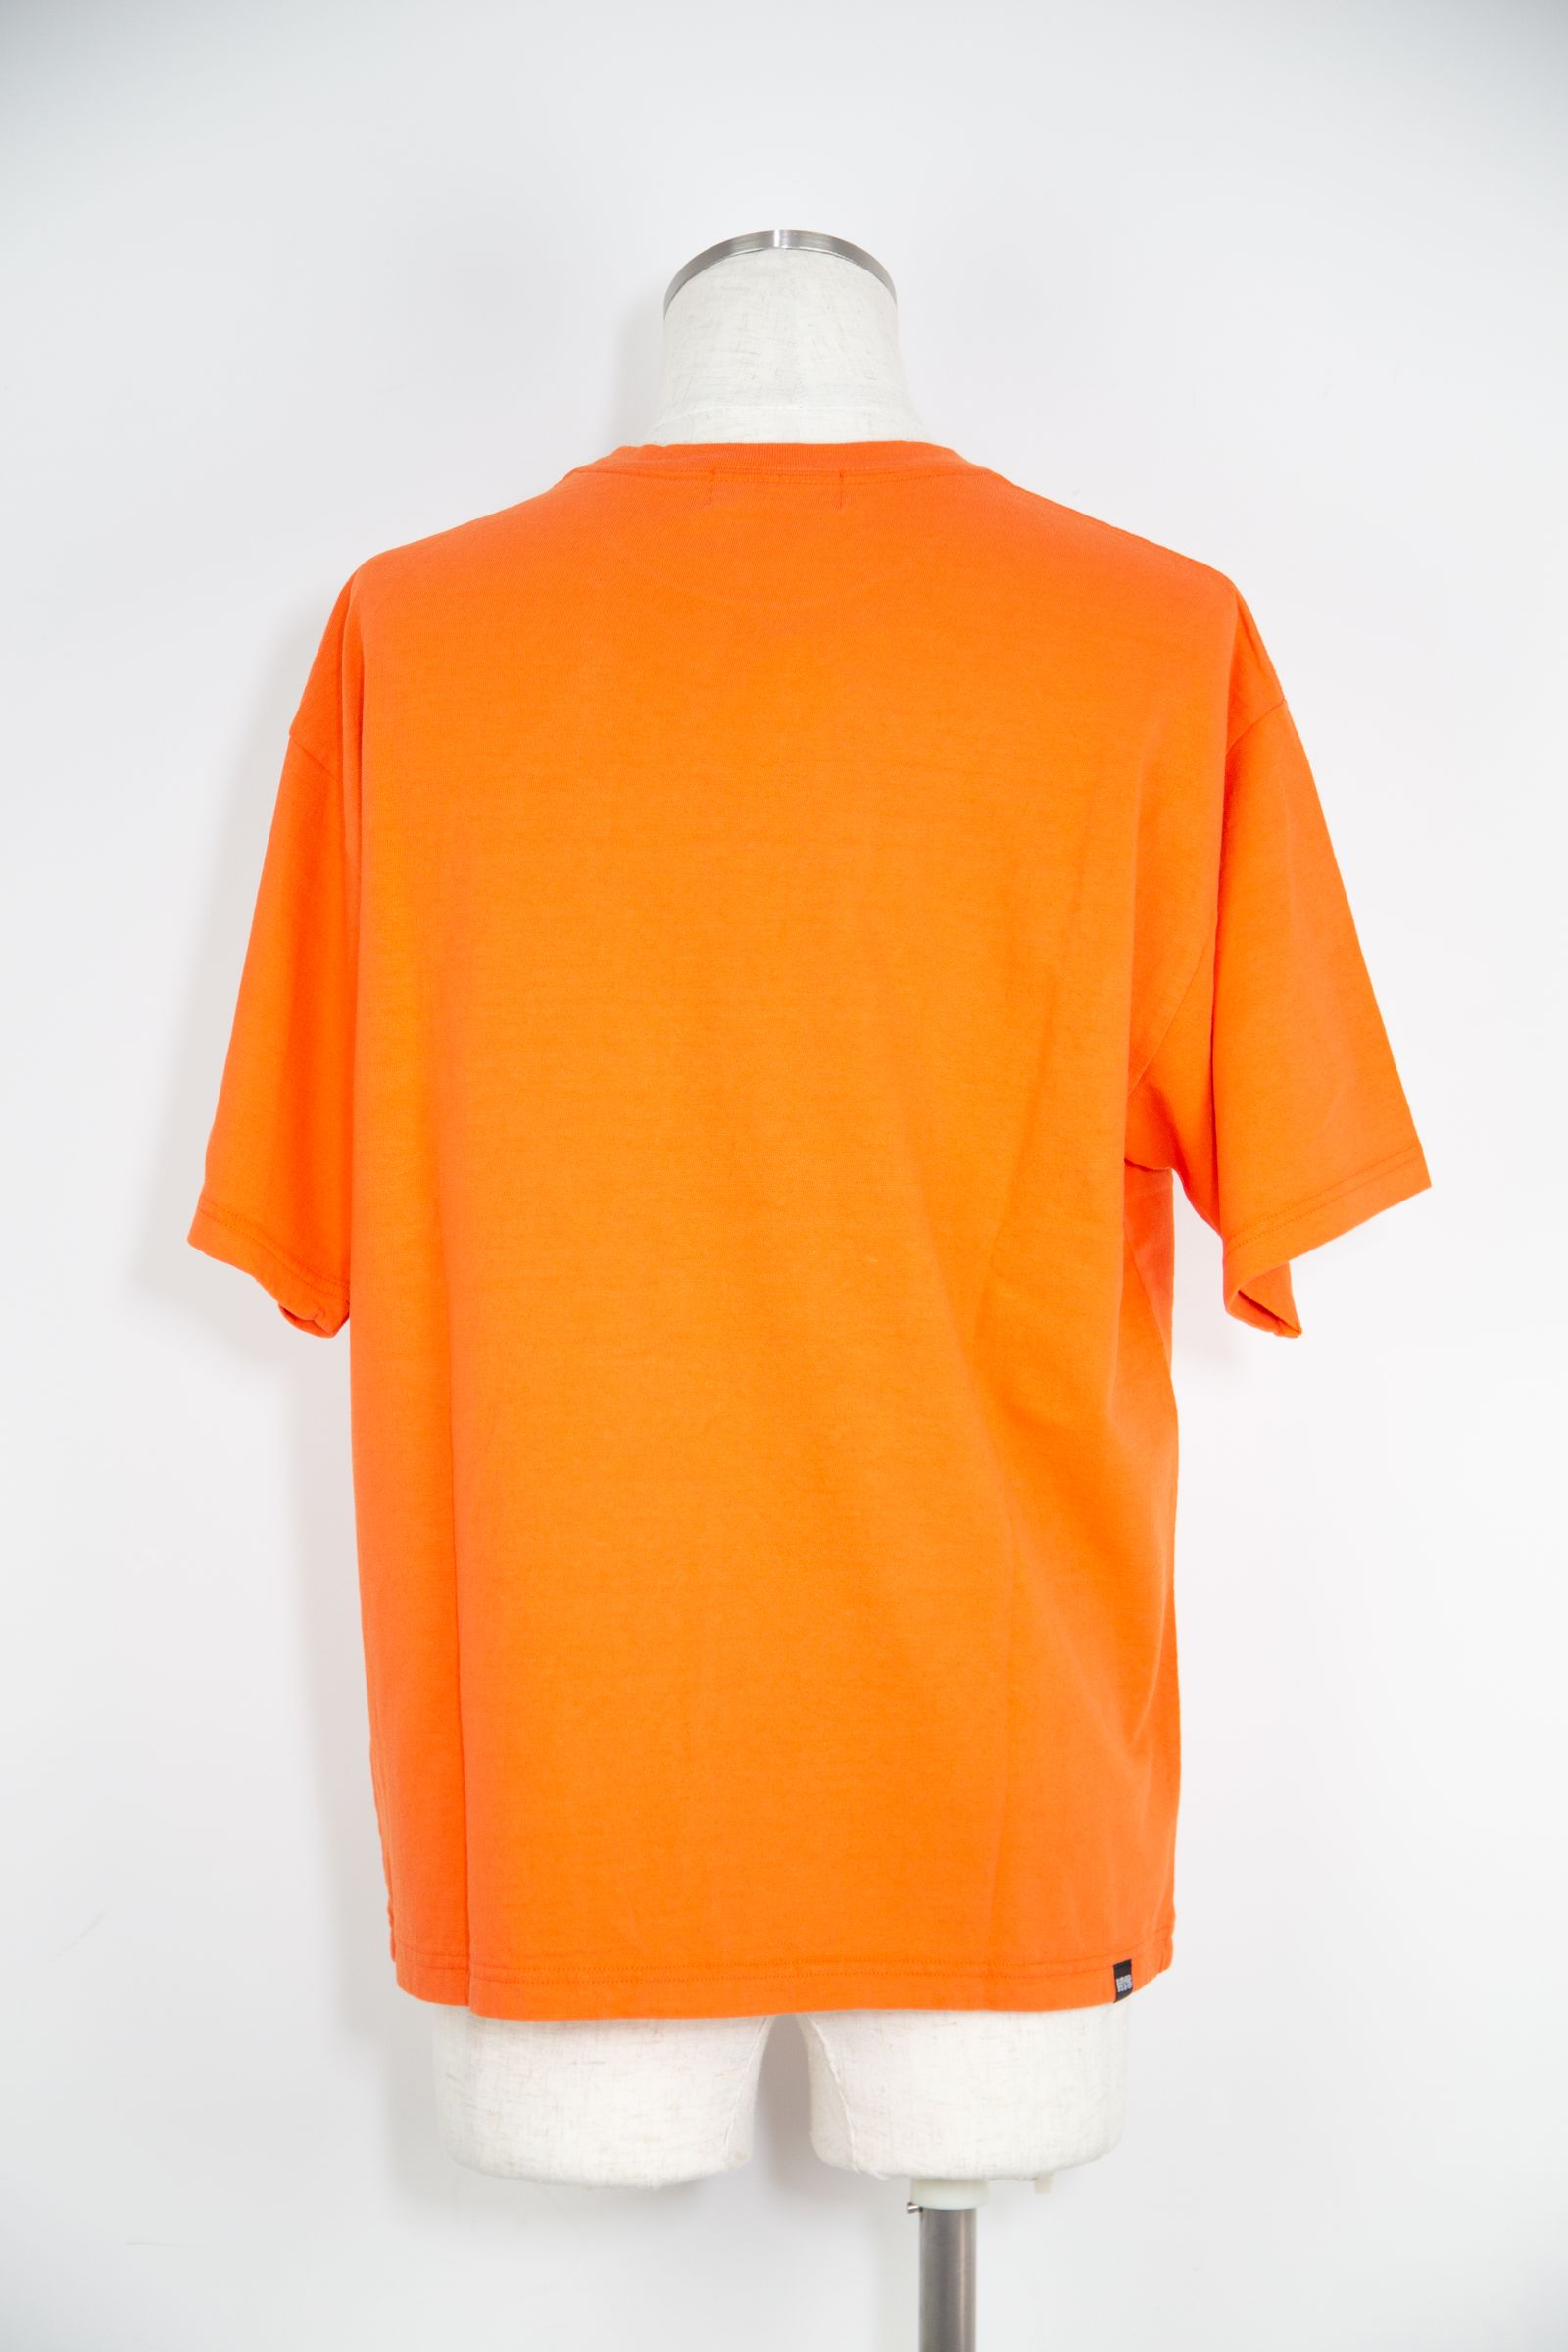 HYSTERIC GLAMOUR - GOOD VIBRATION Tシャツ / オレンジ | Tempt